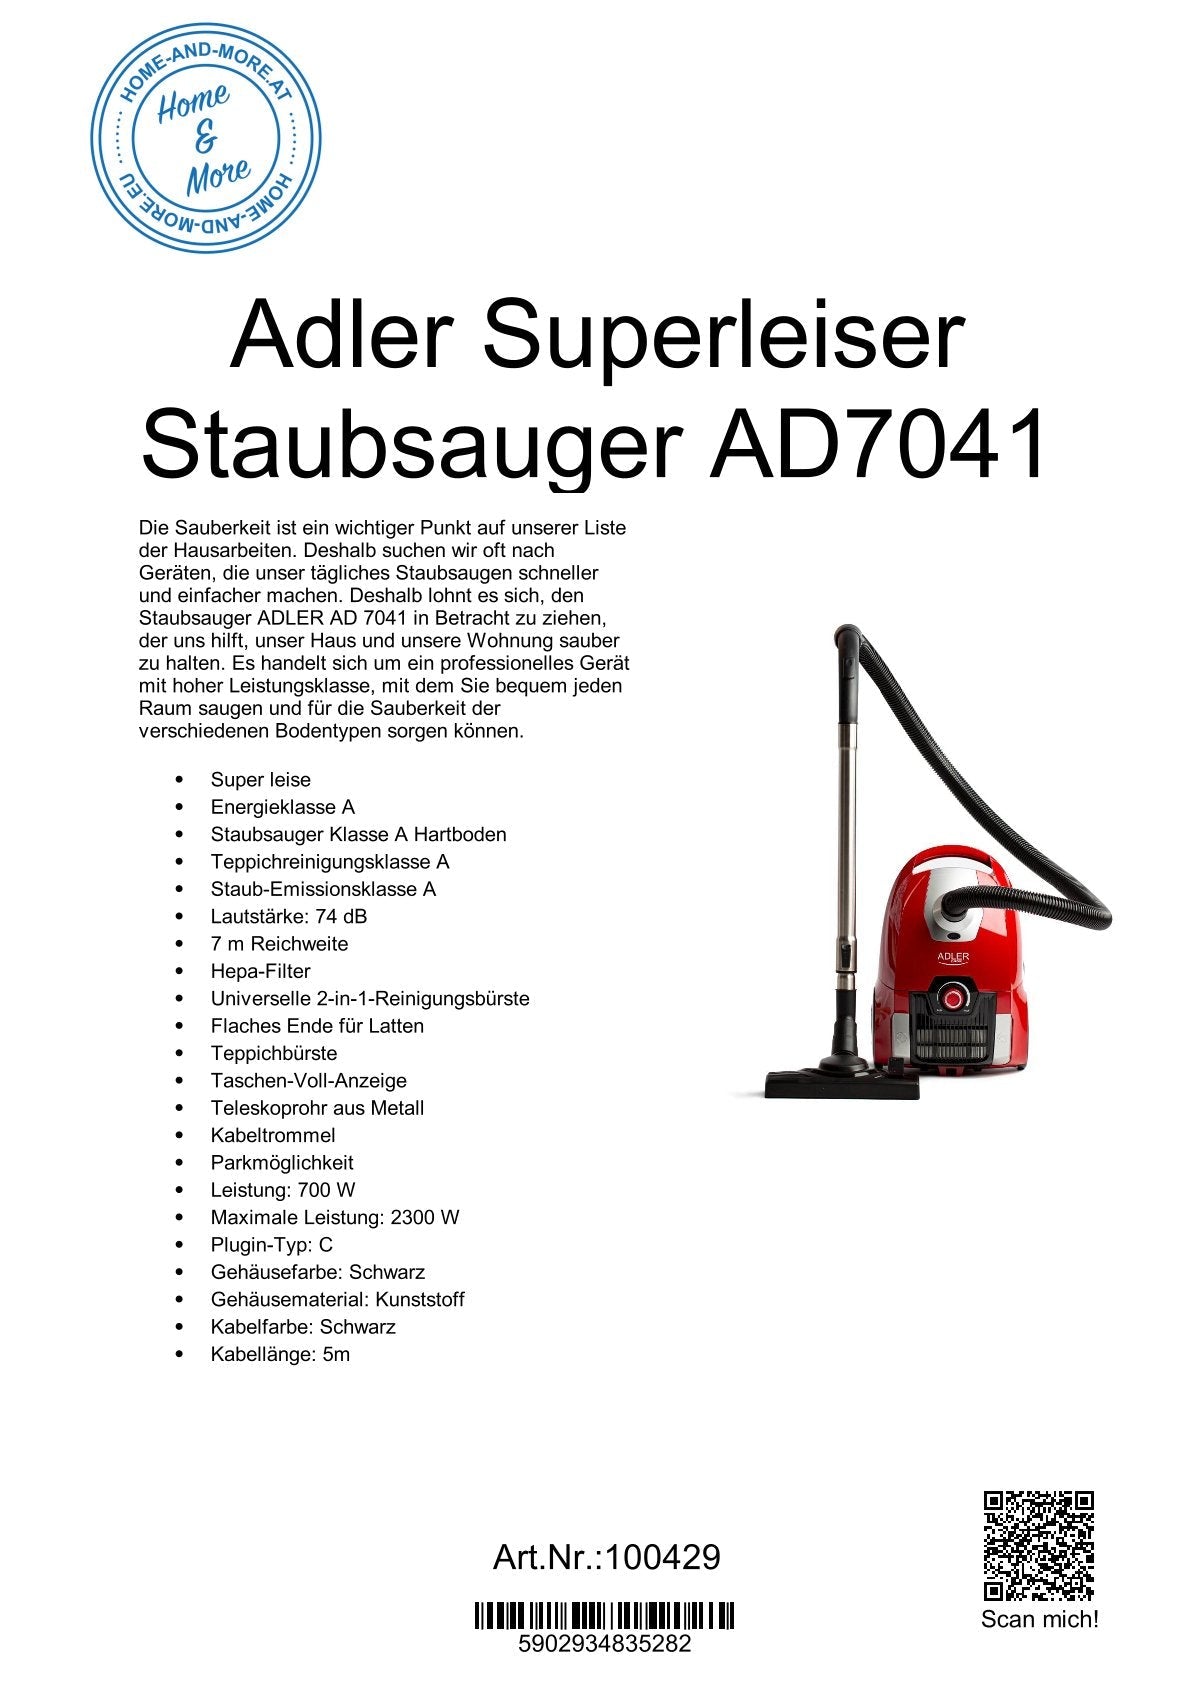 Adler Superleiser Staubsauger AD7041